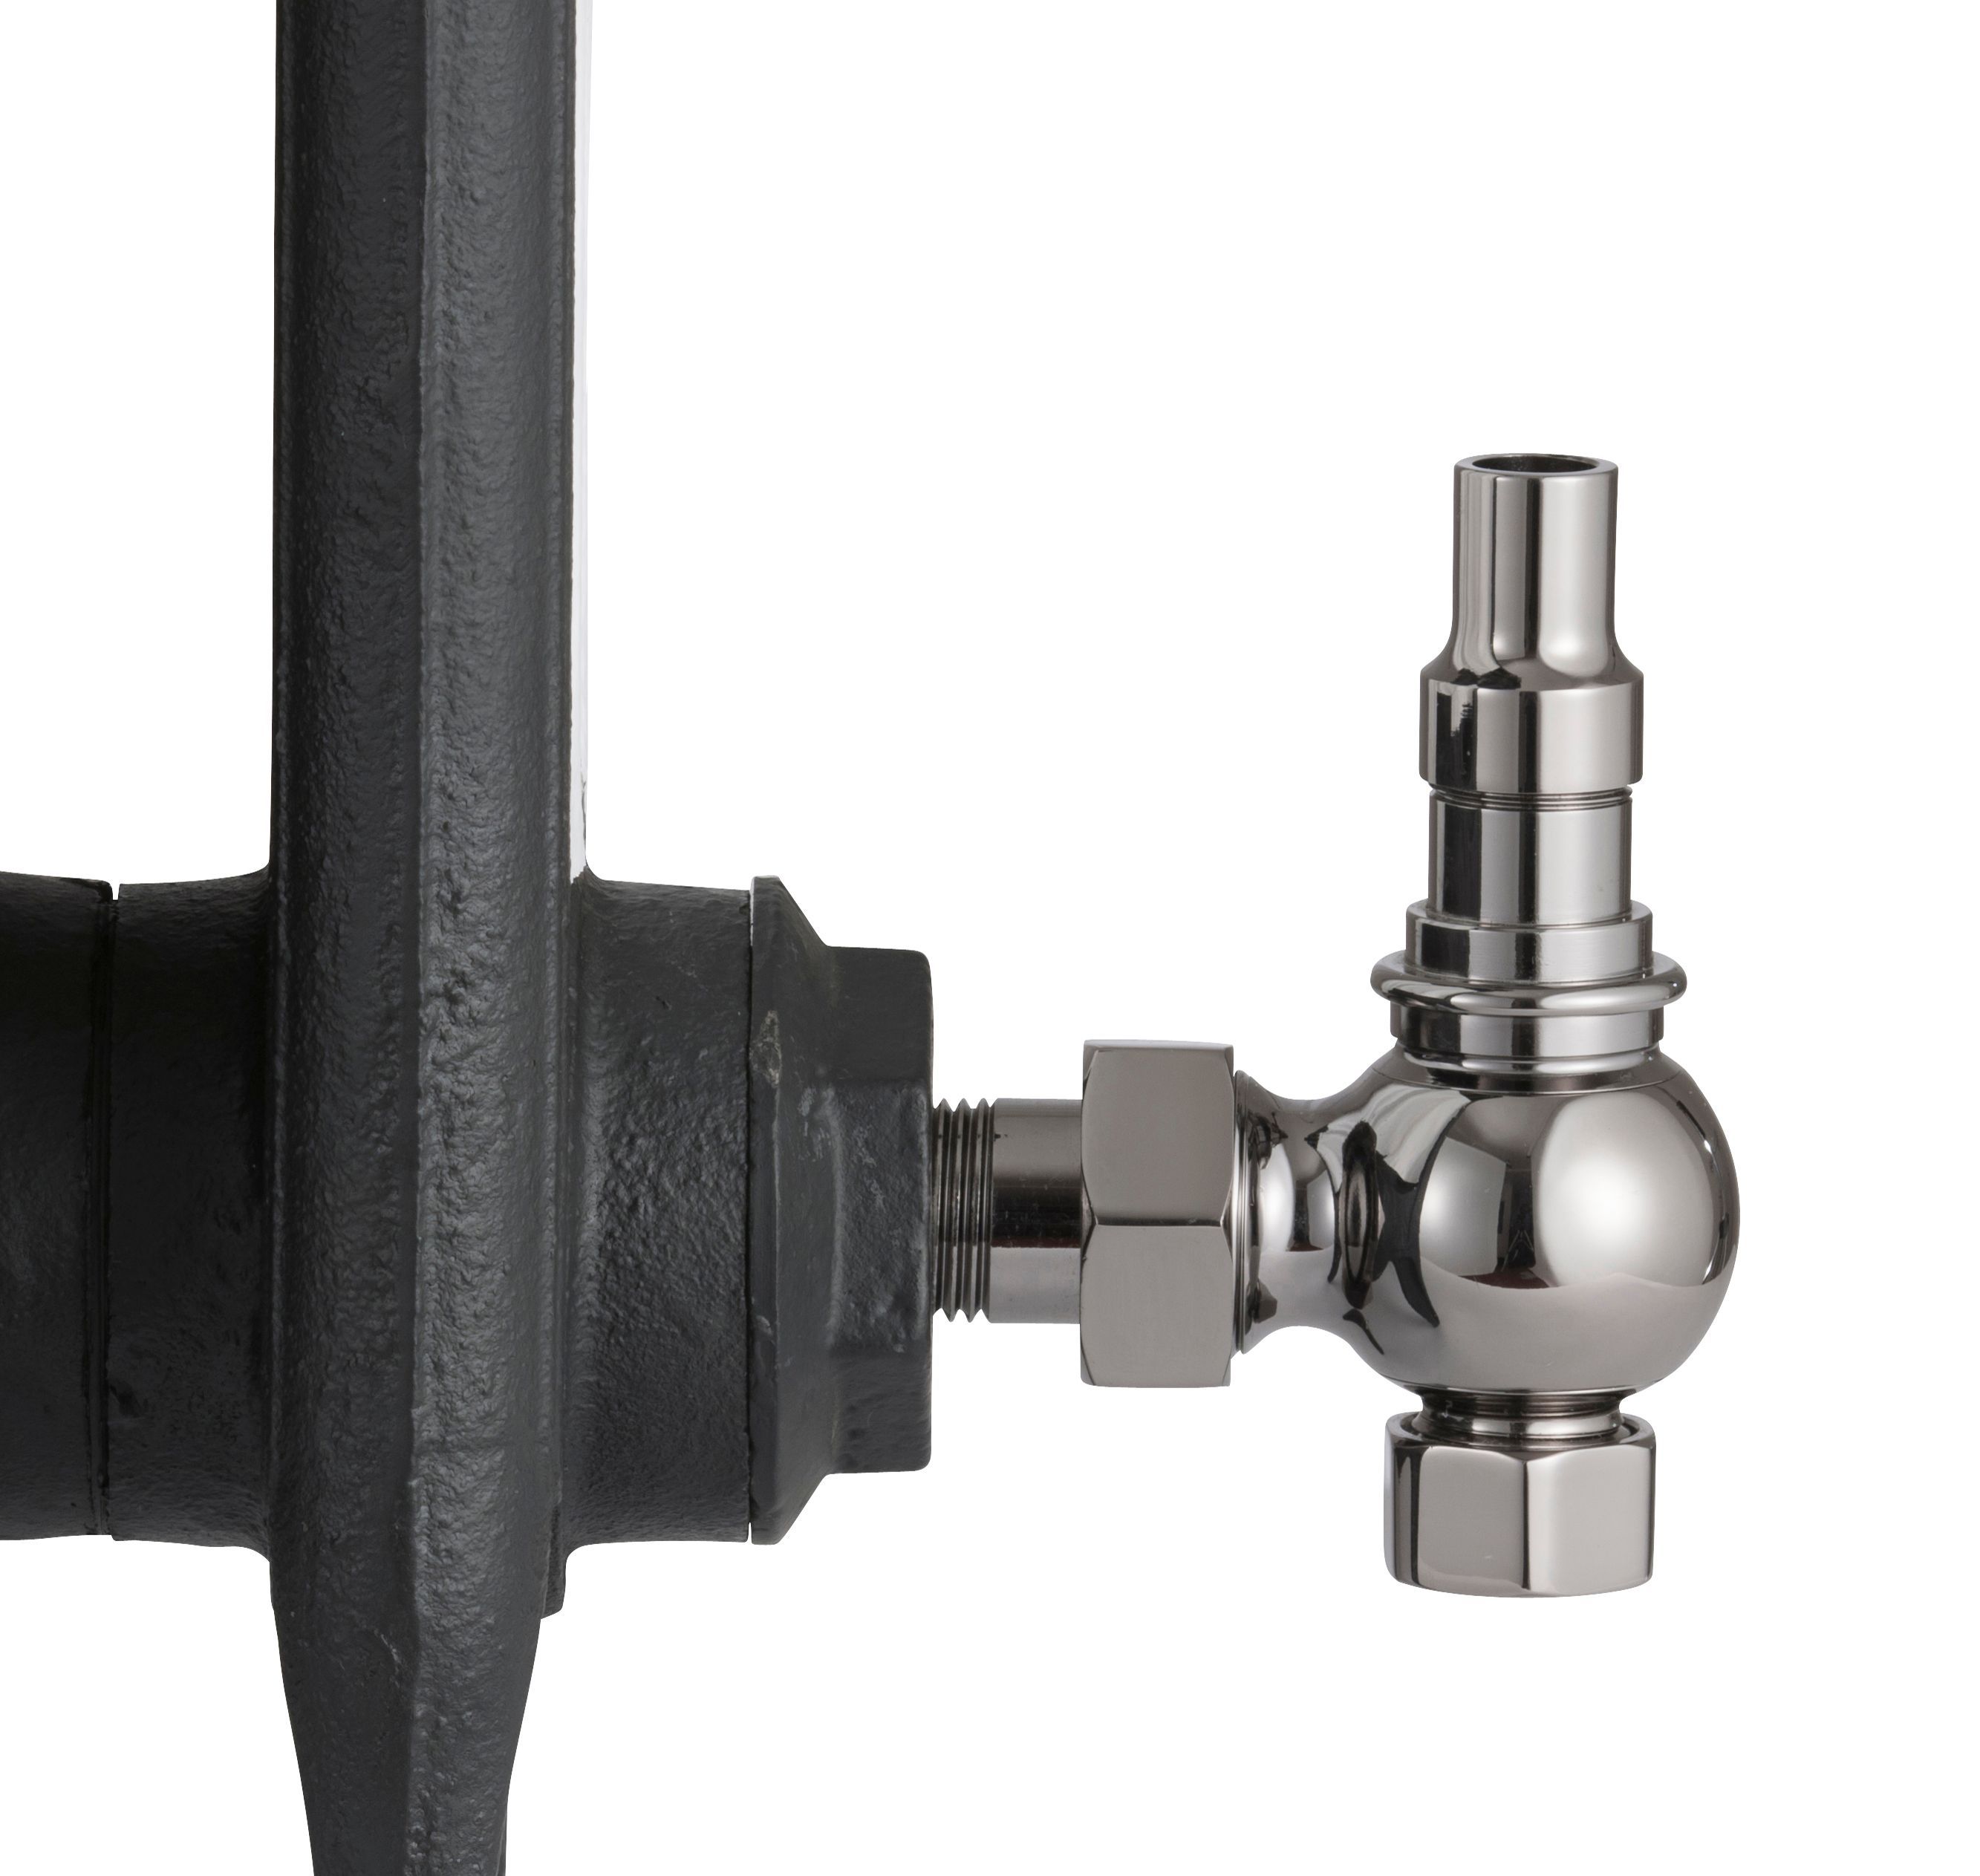 Arroll UK28 Black Nickel-plated Angled Thermostatic Radiator valve